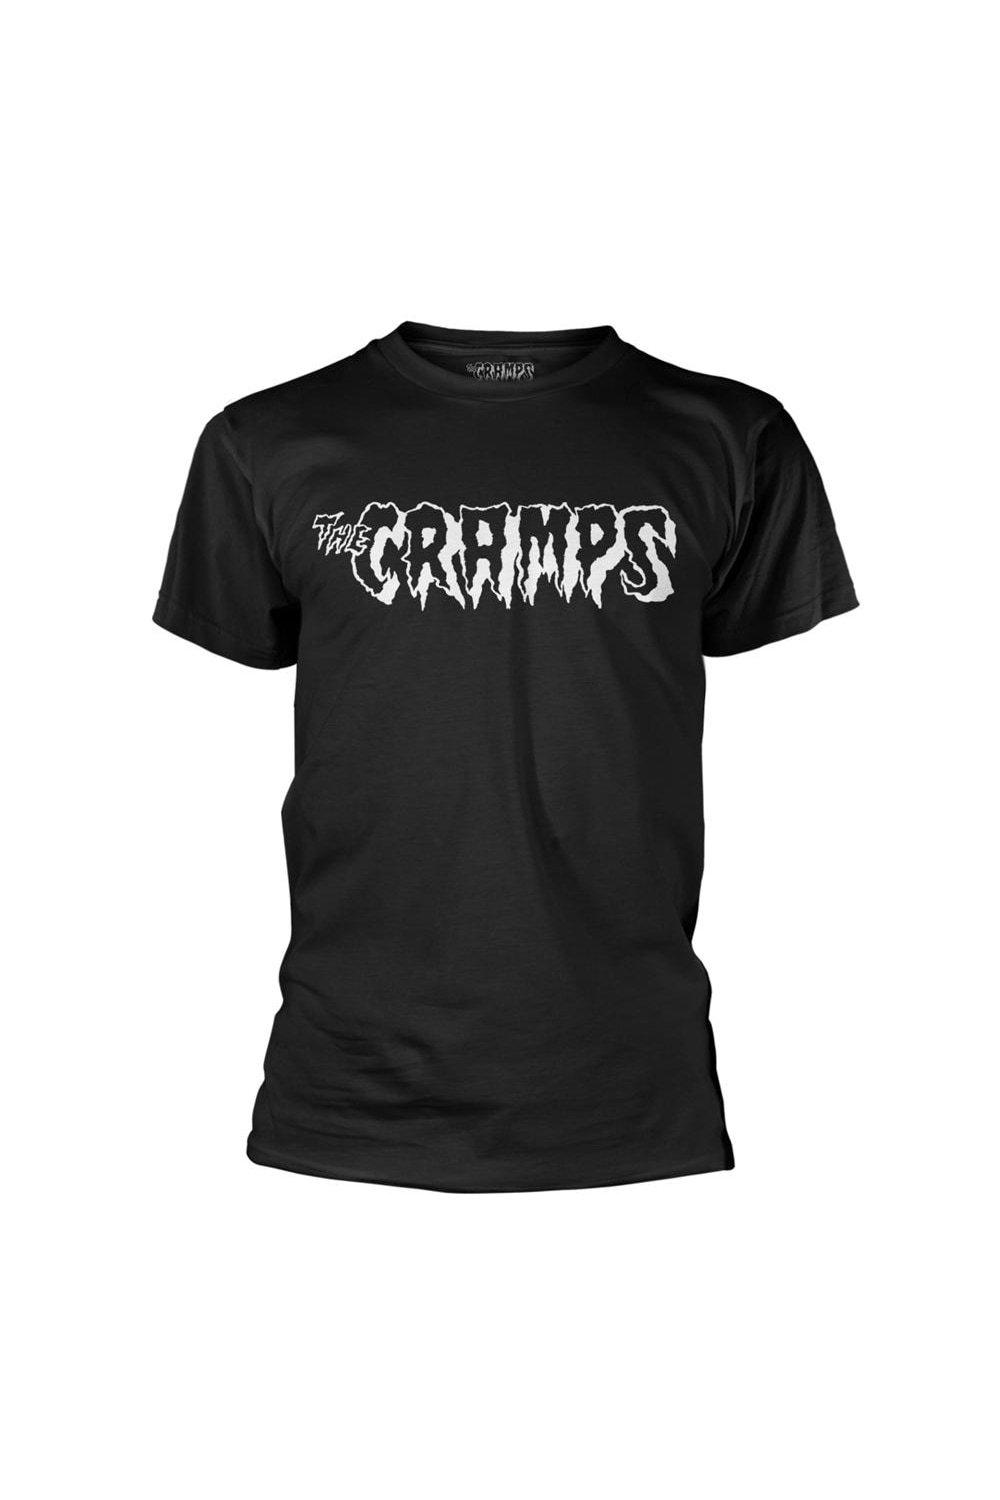 T-Shirts | Logo T-Shirt | The Cramps